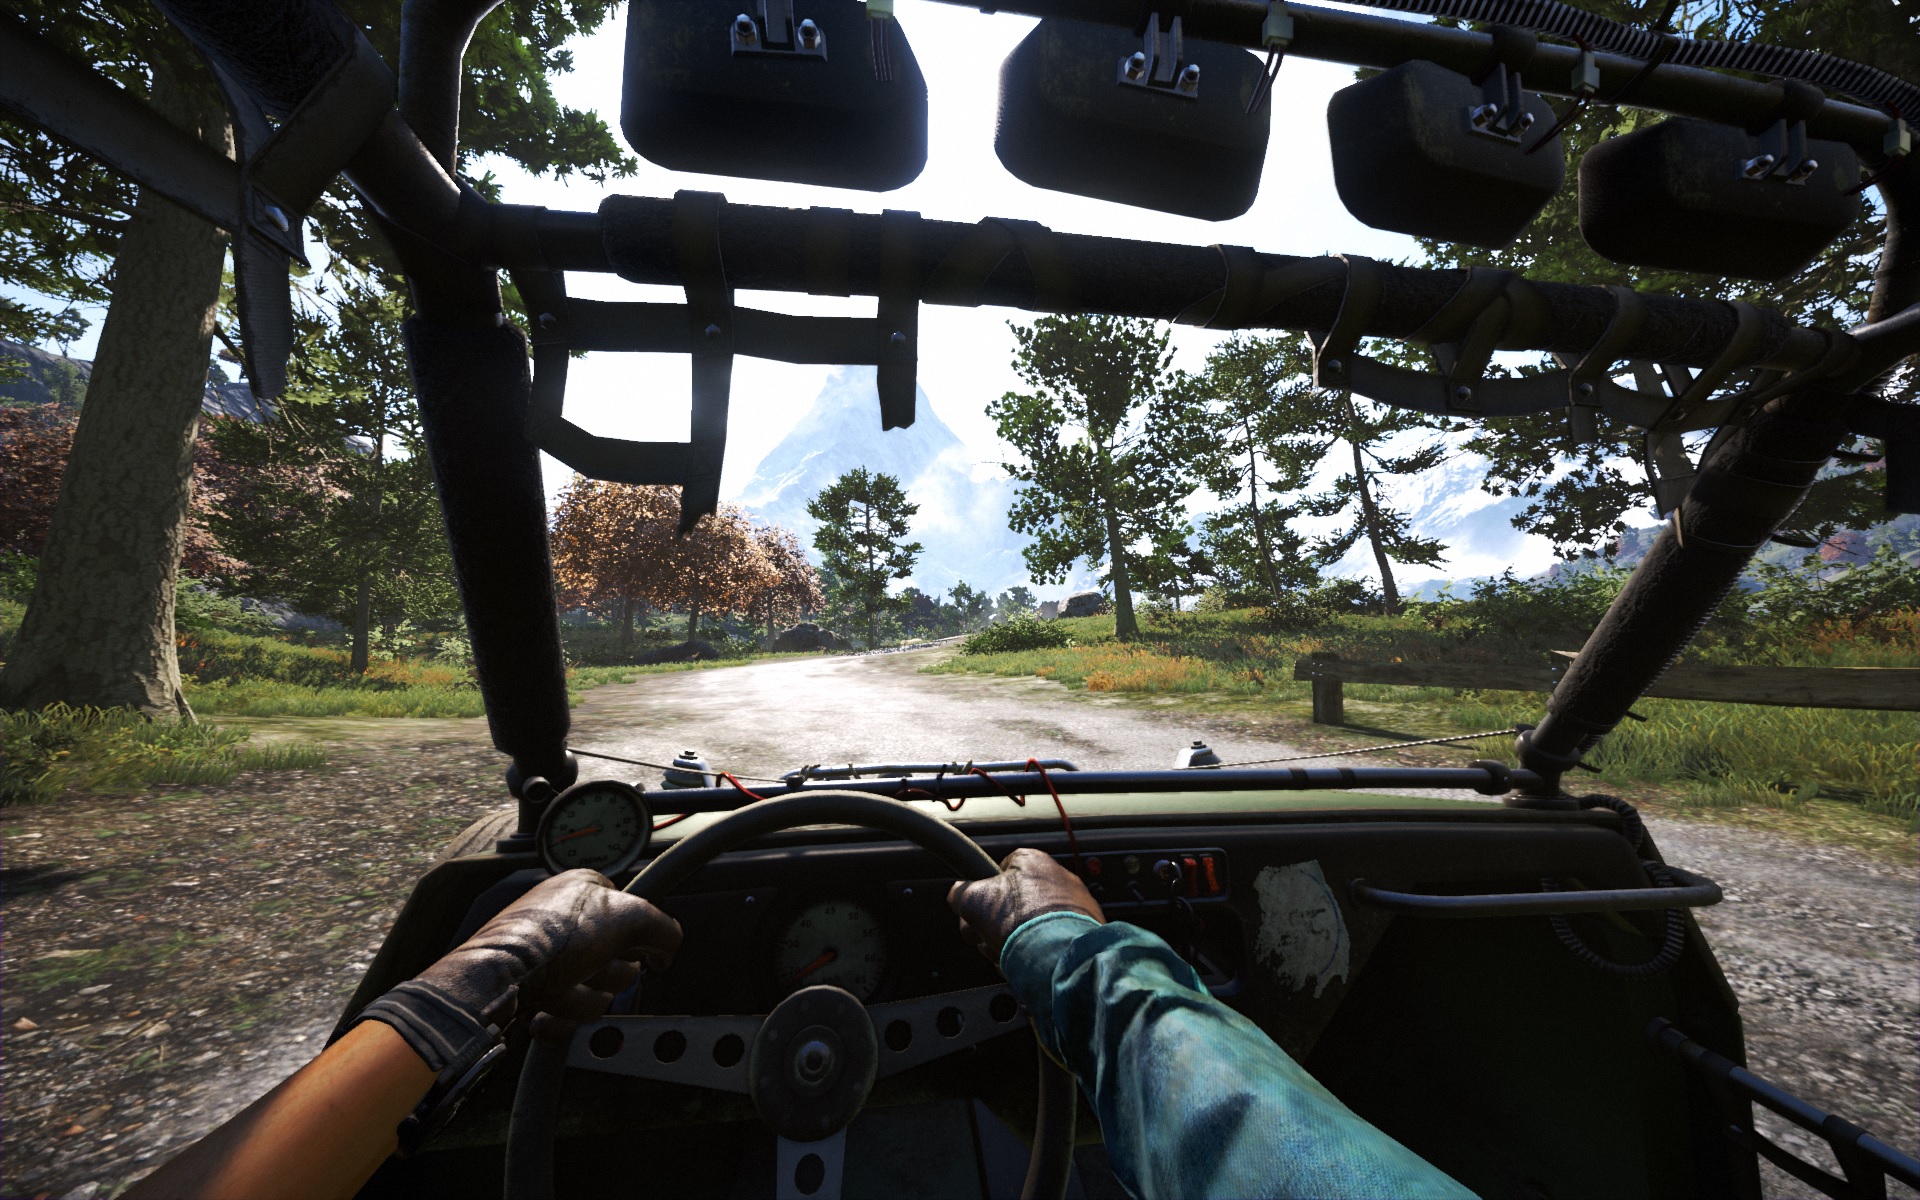 View the Mod DB Far Cry 4: Redux mod for Far Cry 4 image fov 5.